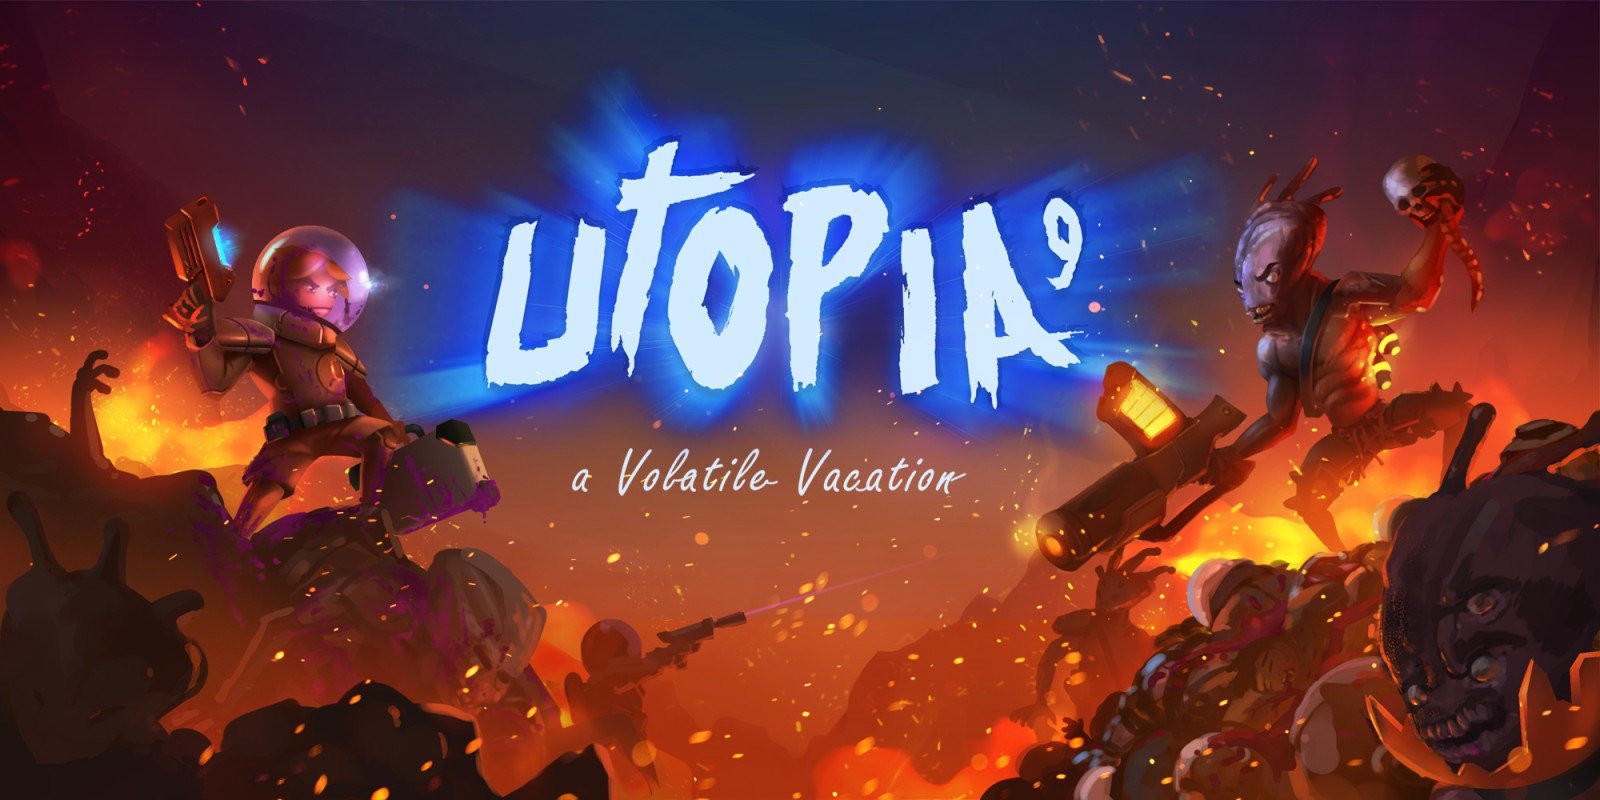 UTOPIA 9 A Volatile Vacation 22